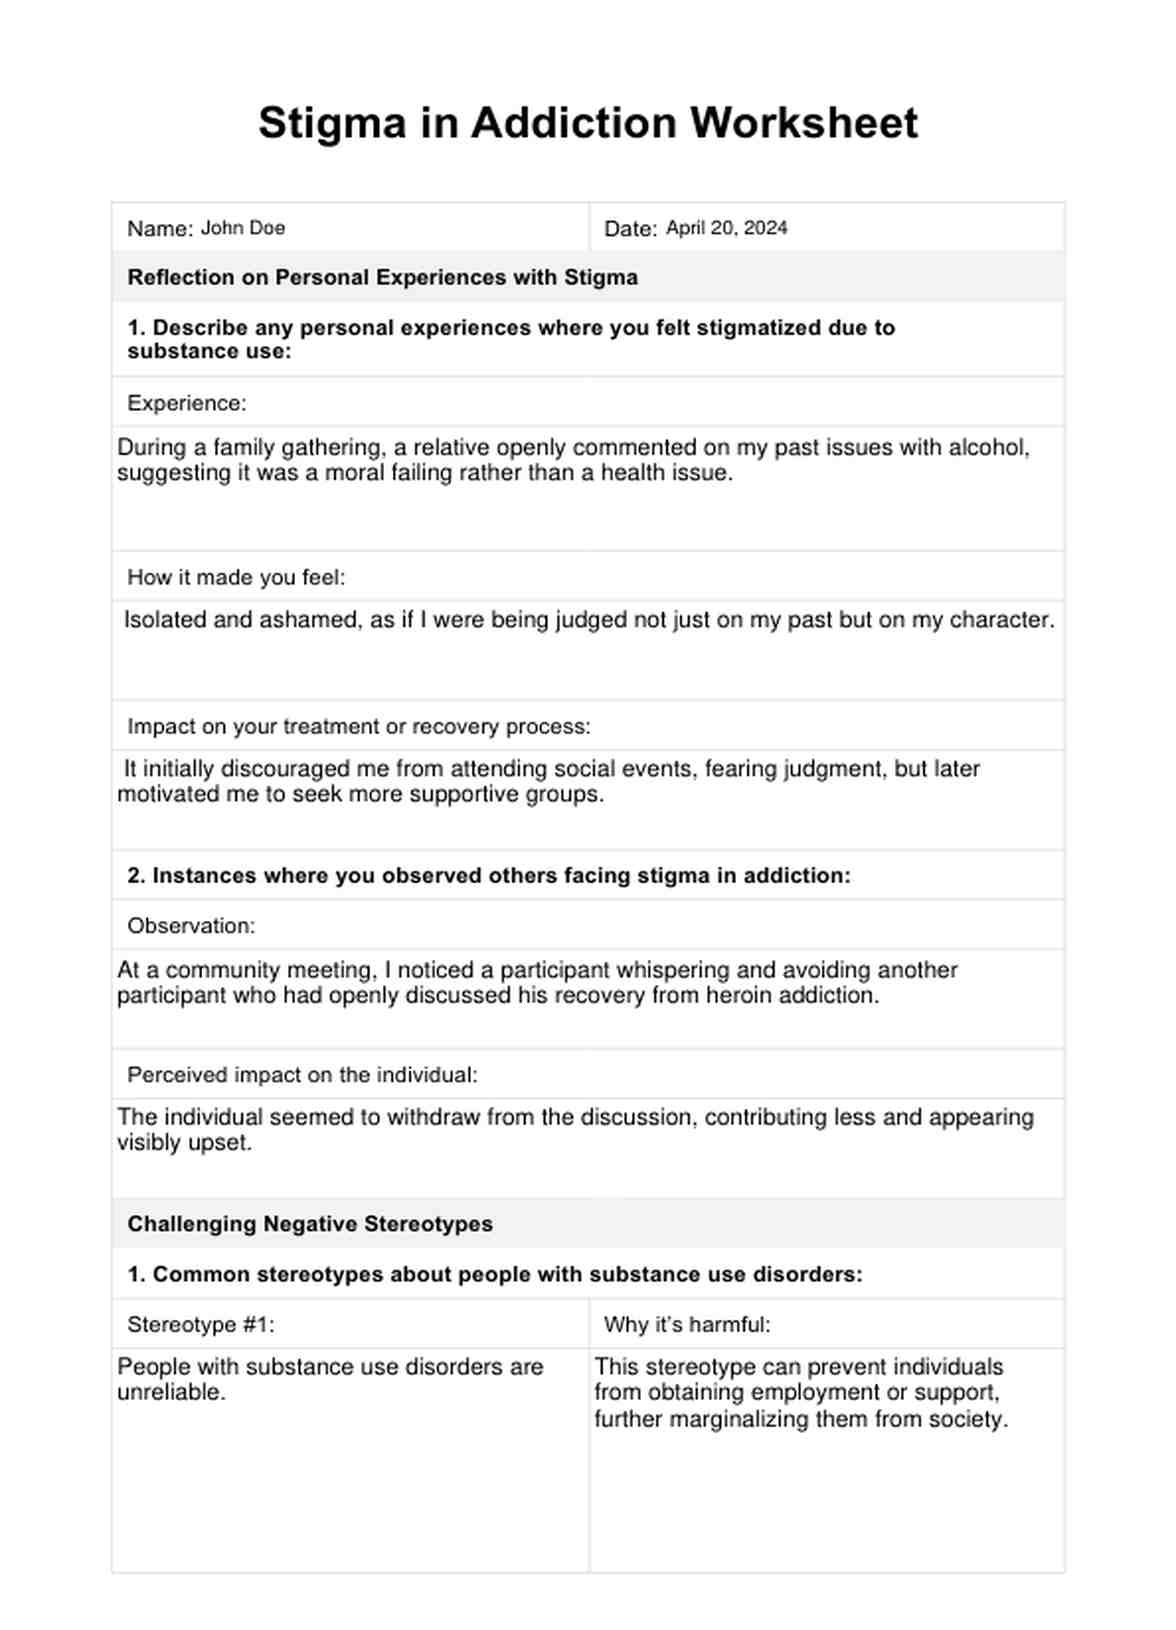 Stigma in Addiction Worksheet PDF Example